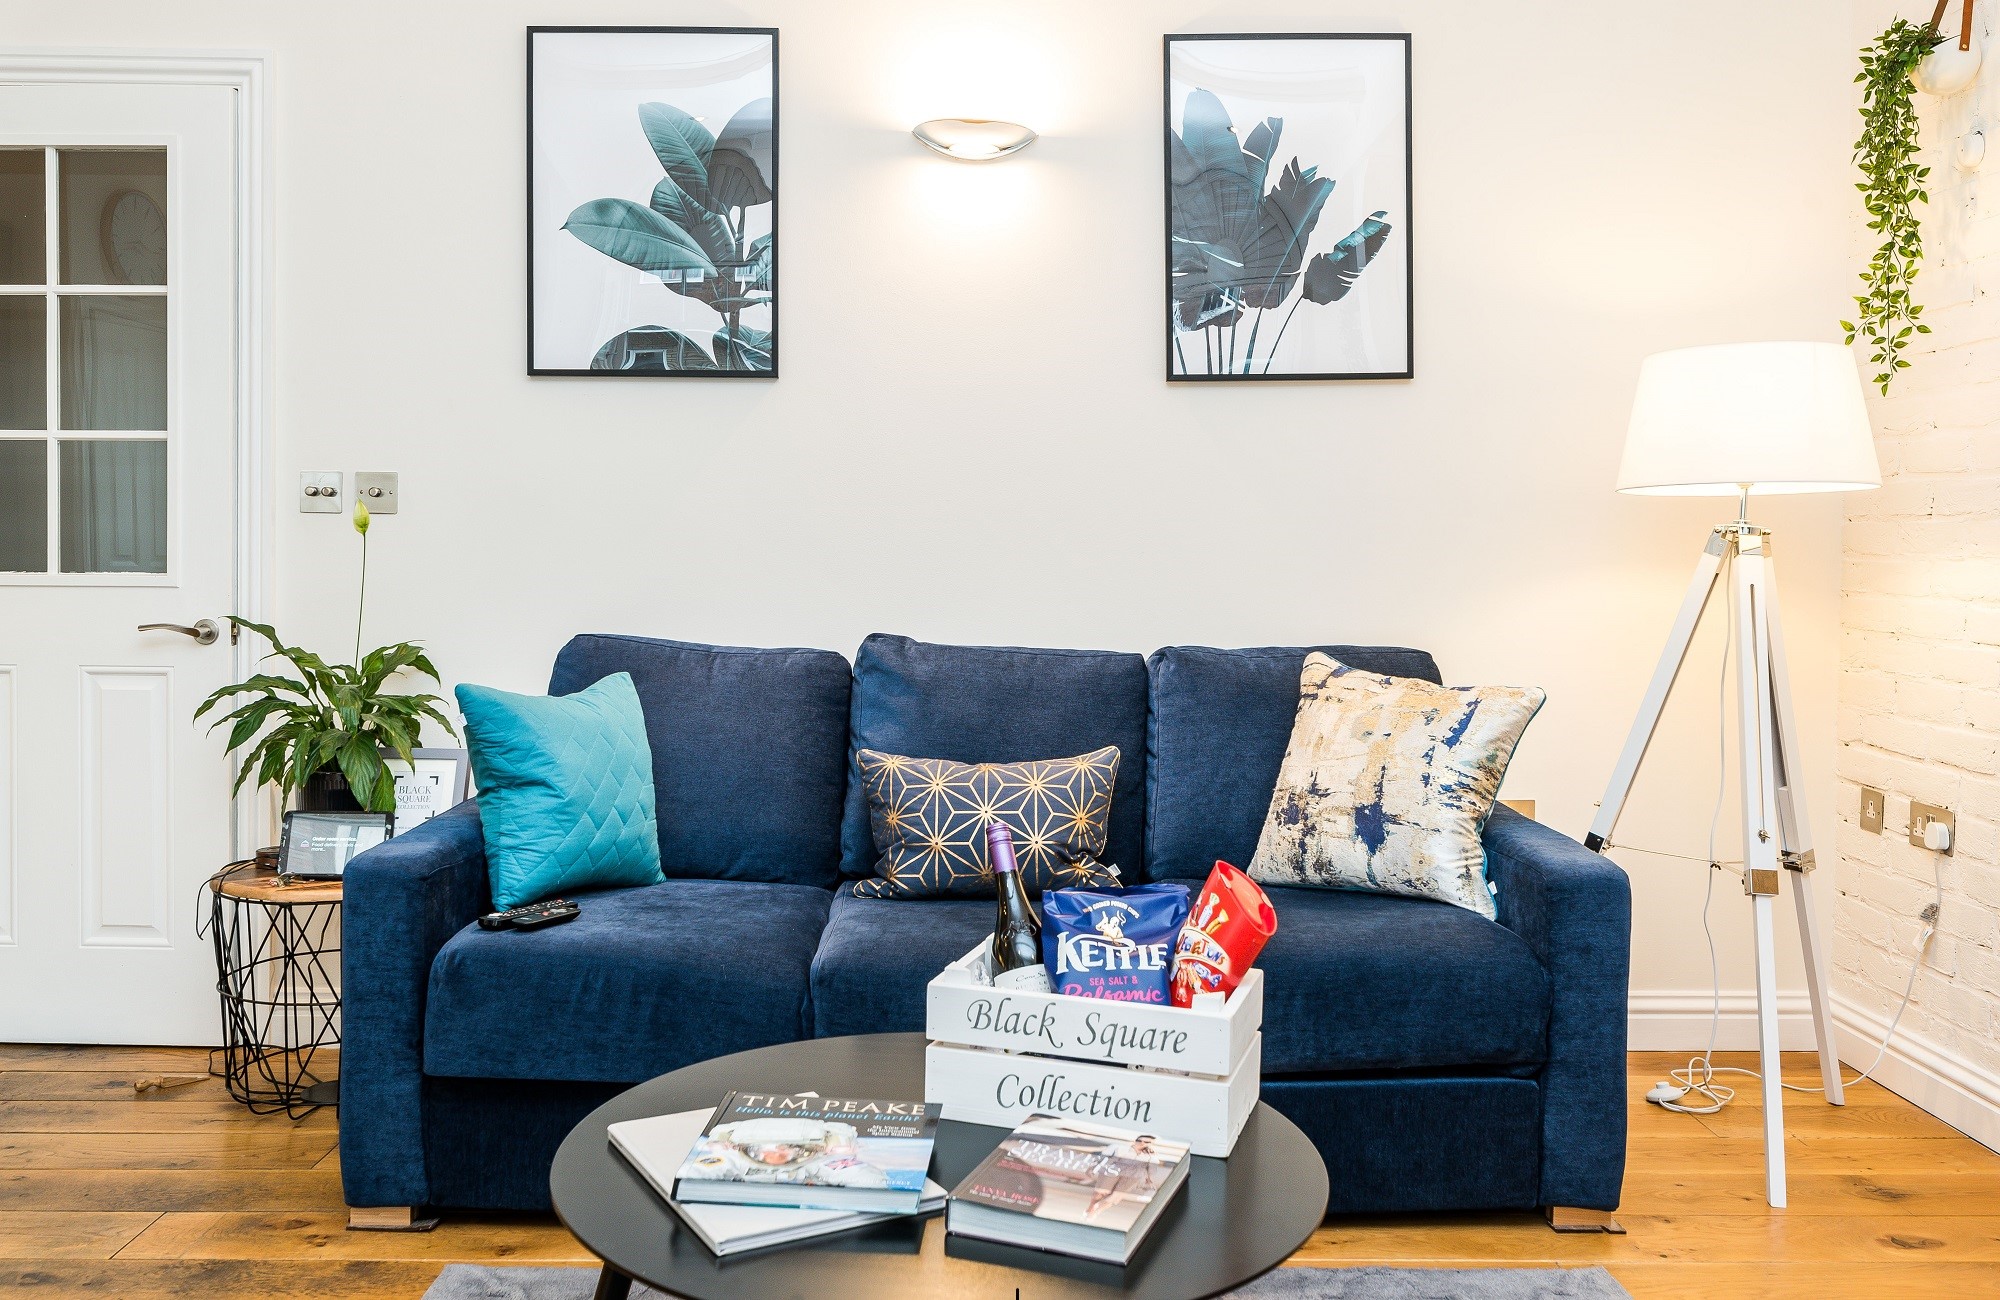 <img src="ana.jpg" alt="blue sofa in living room blacksquare apartments"/>